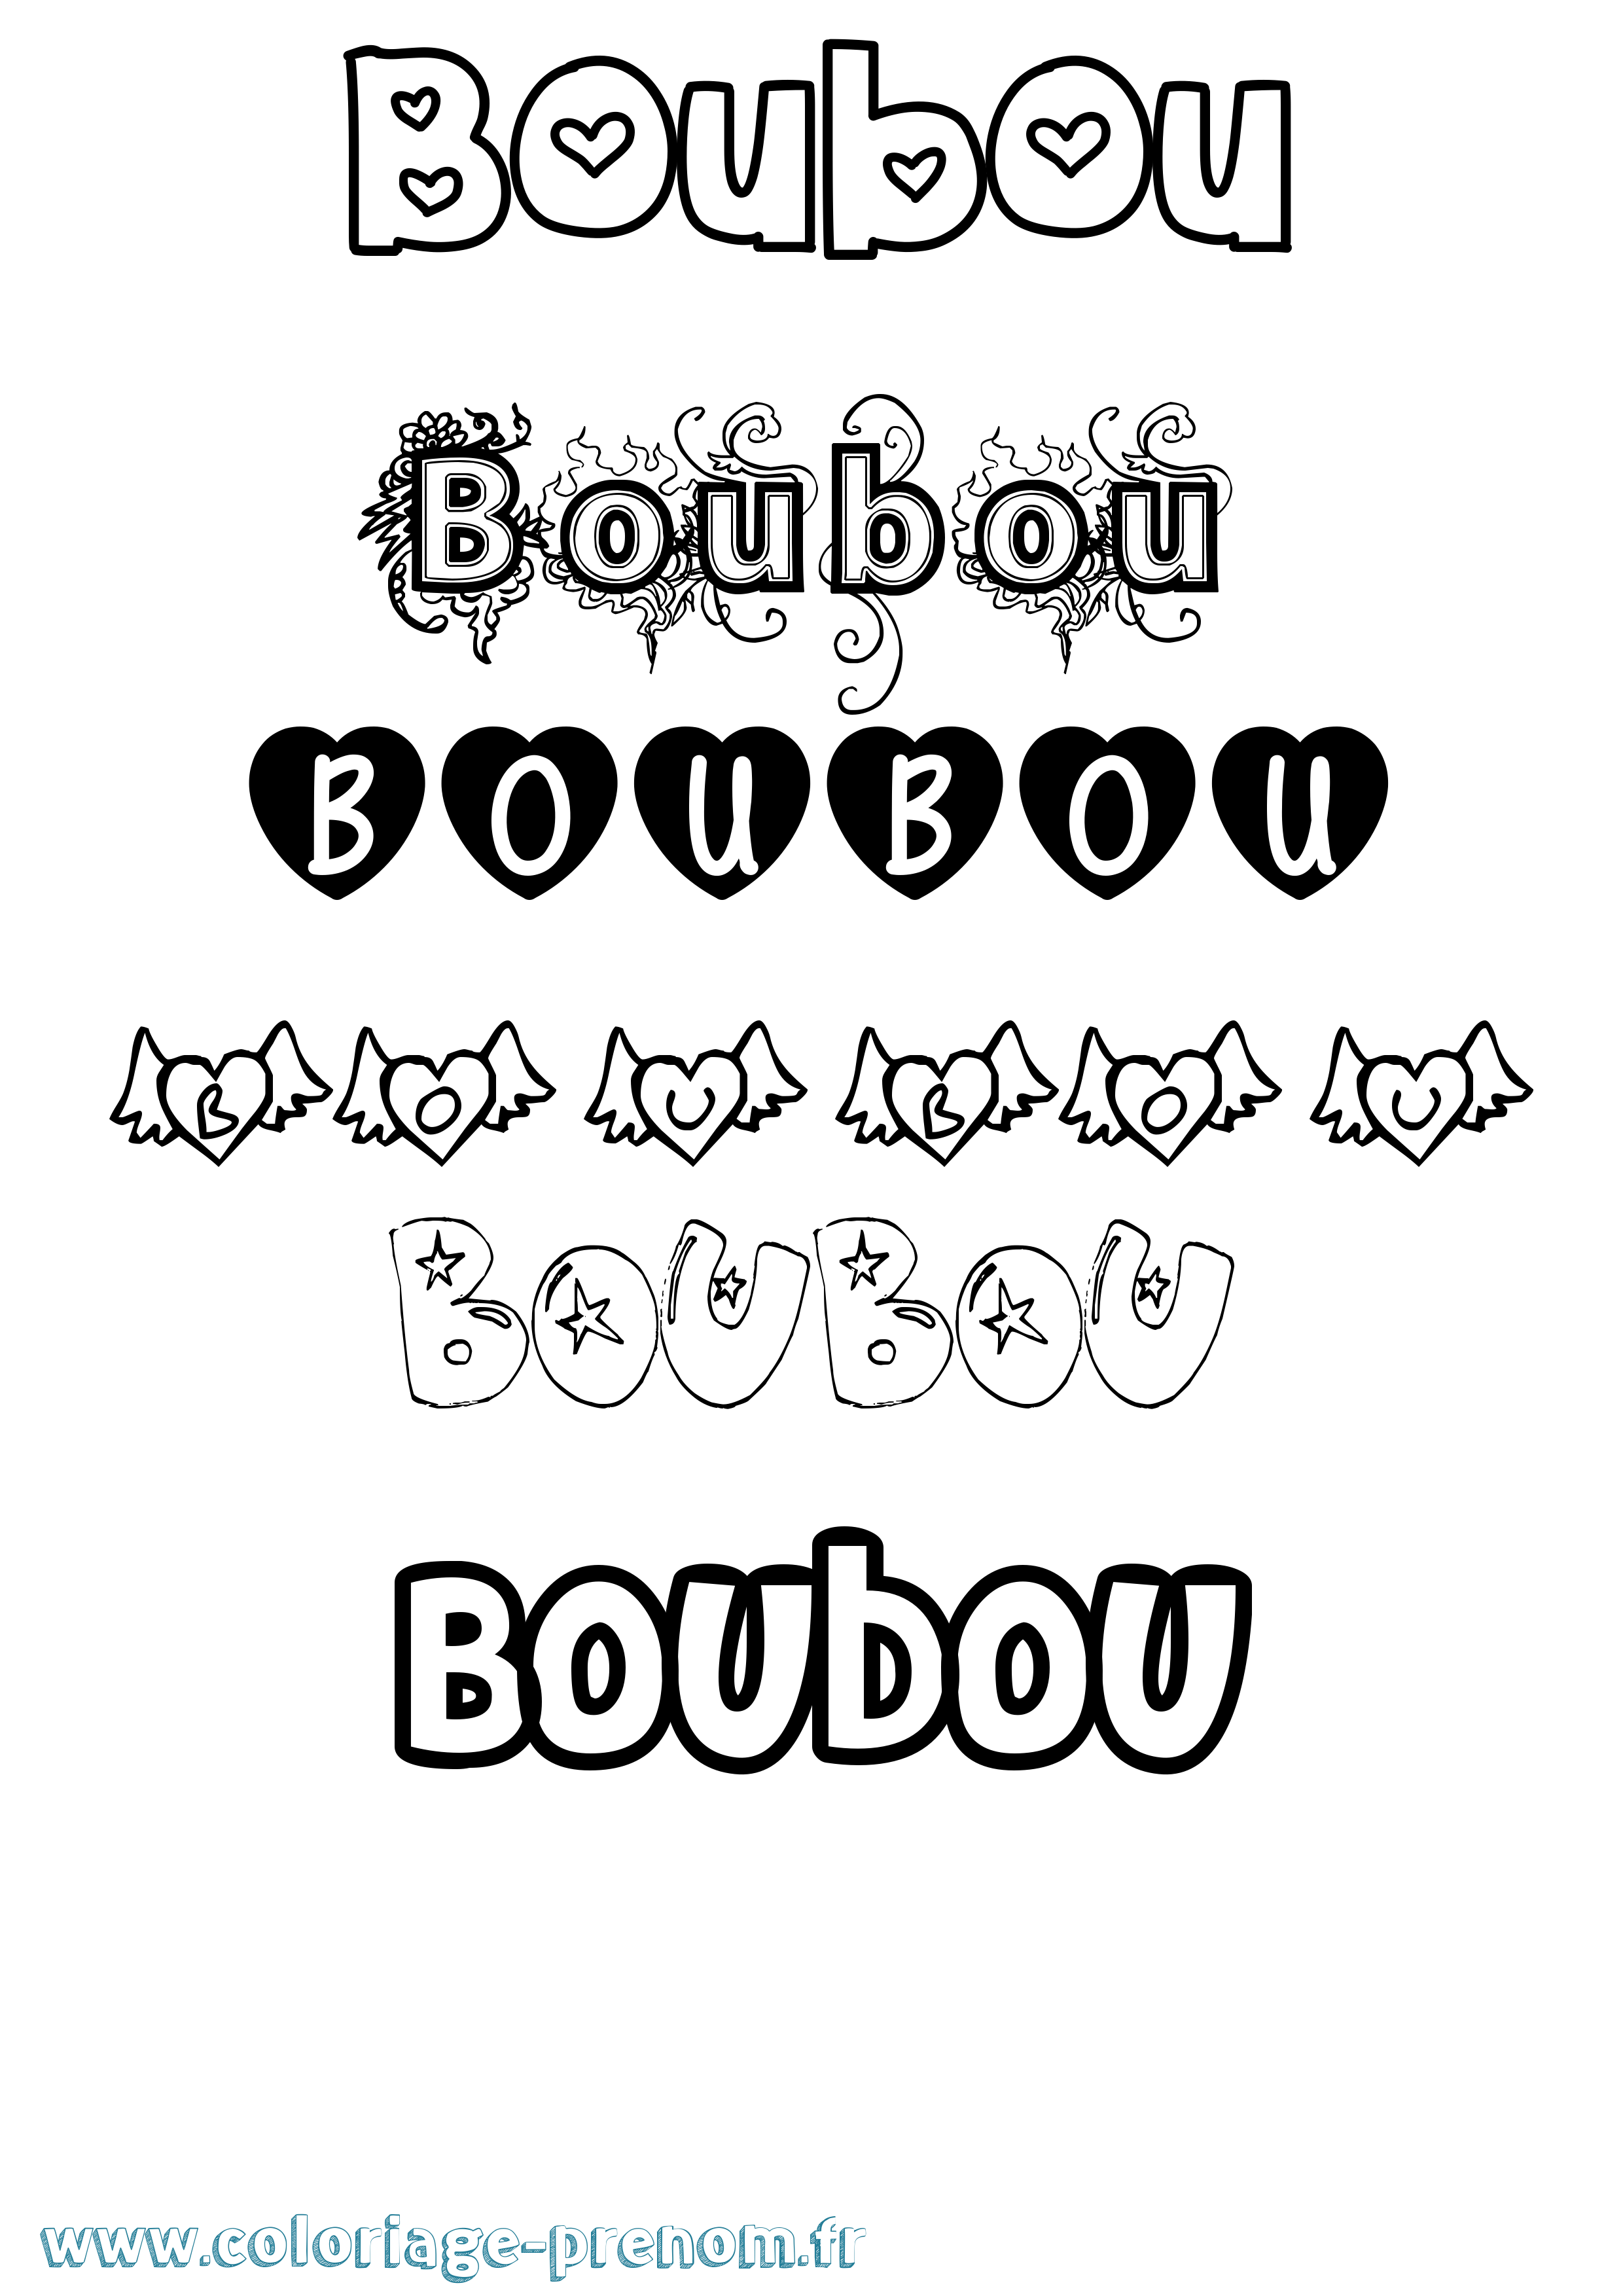 Coloriage prénom Boubou